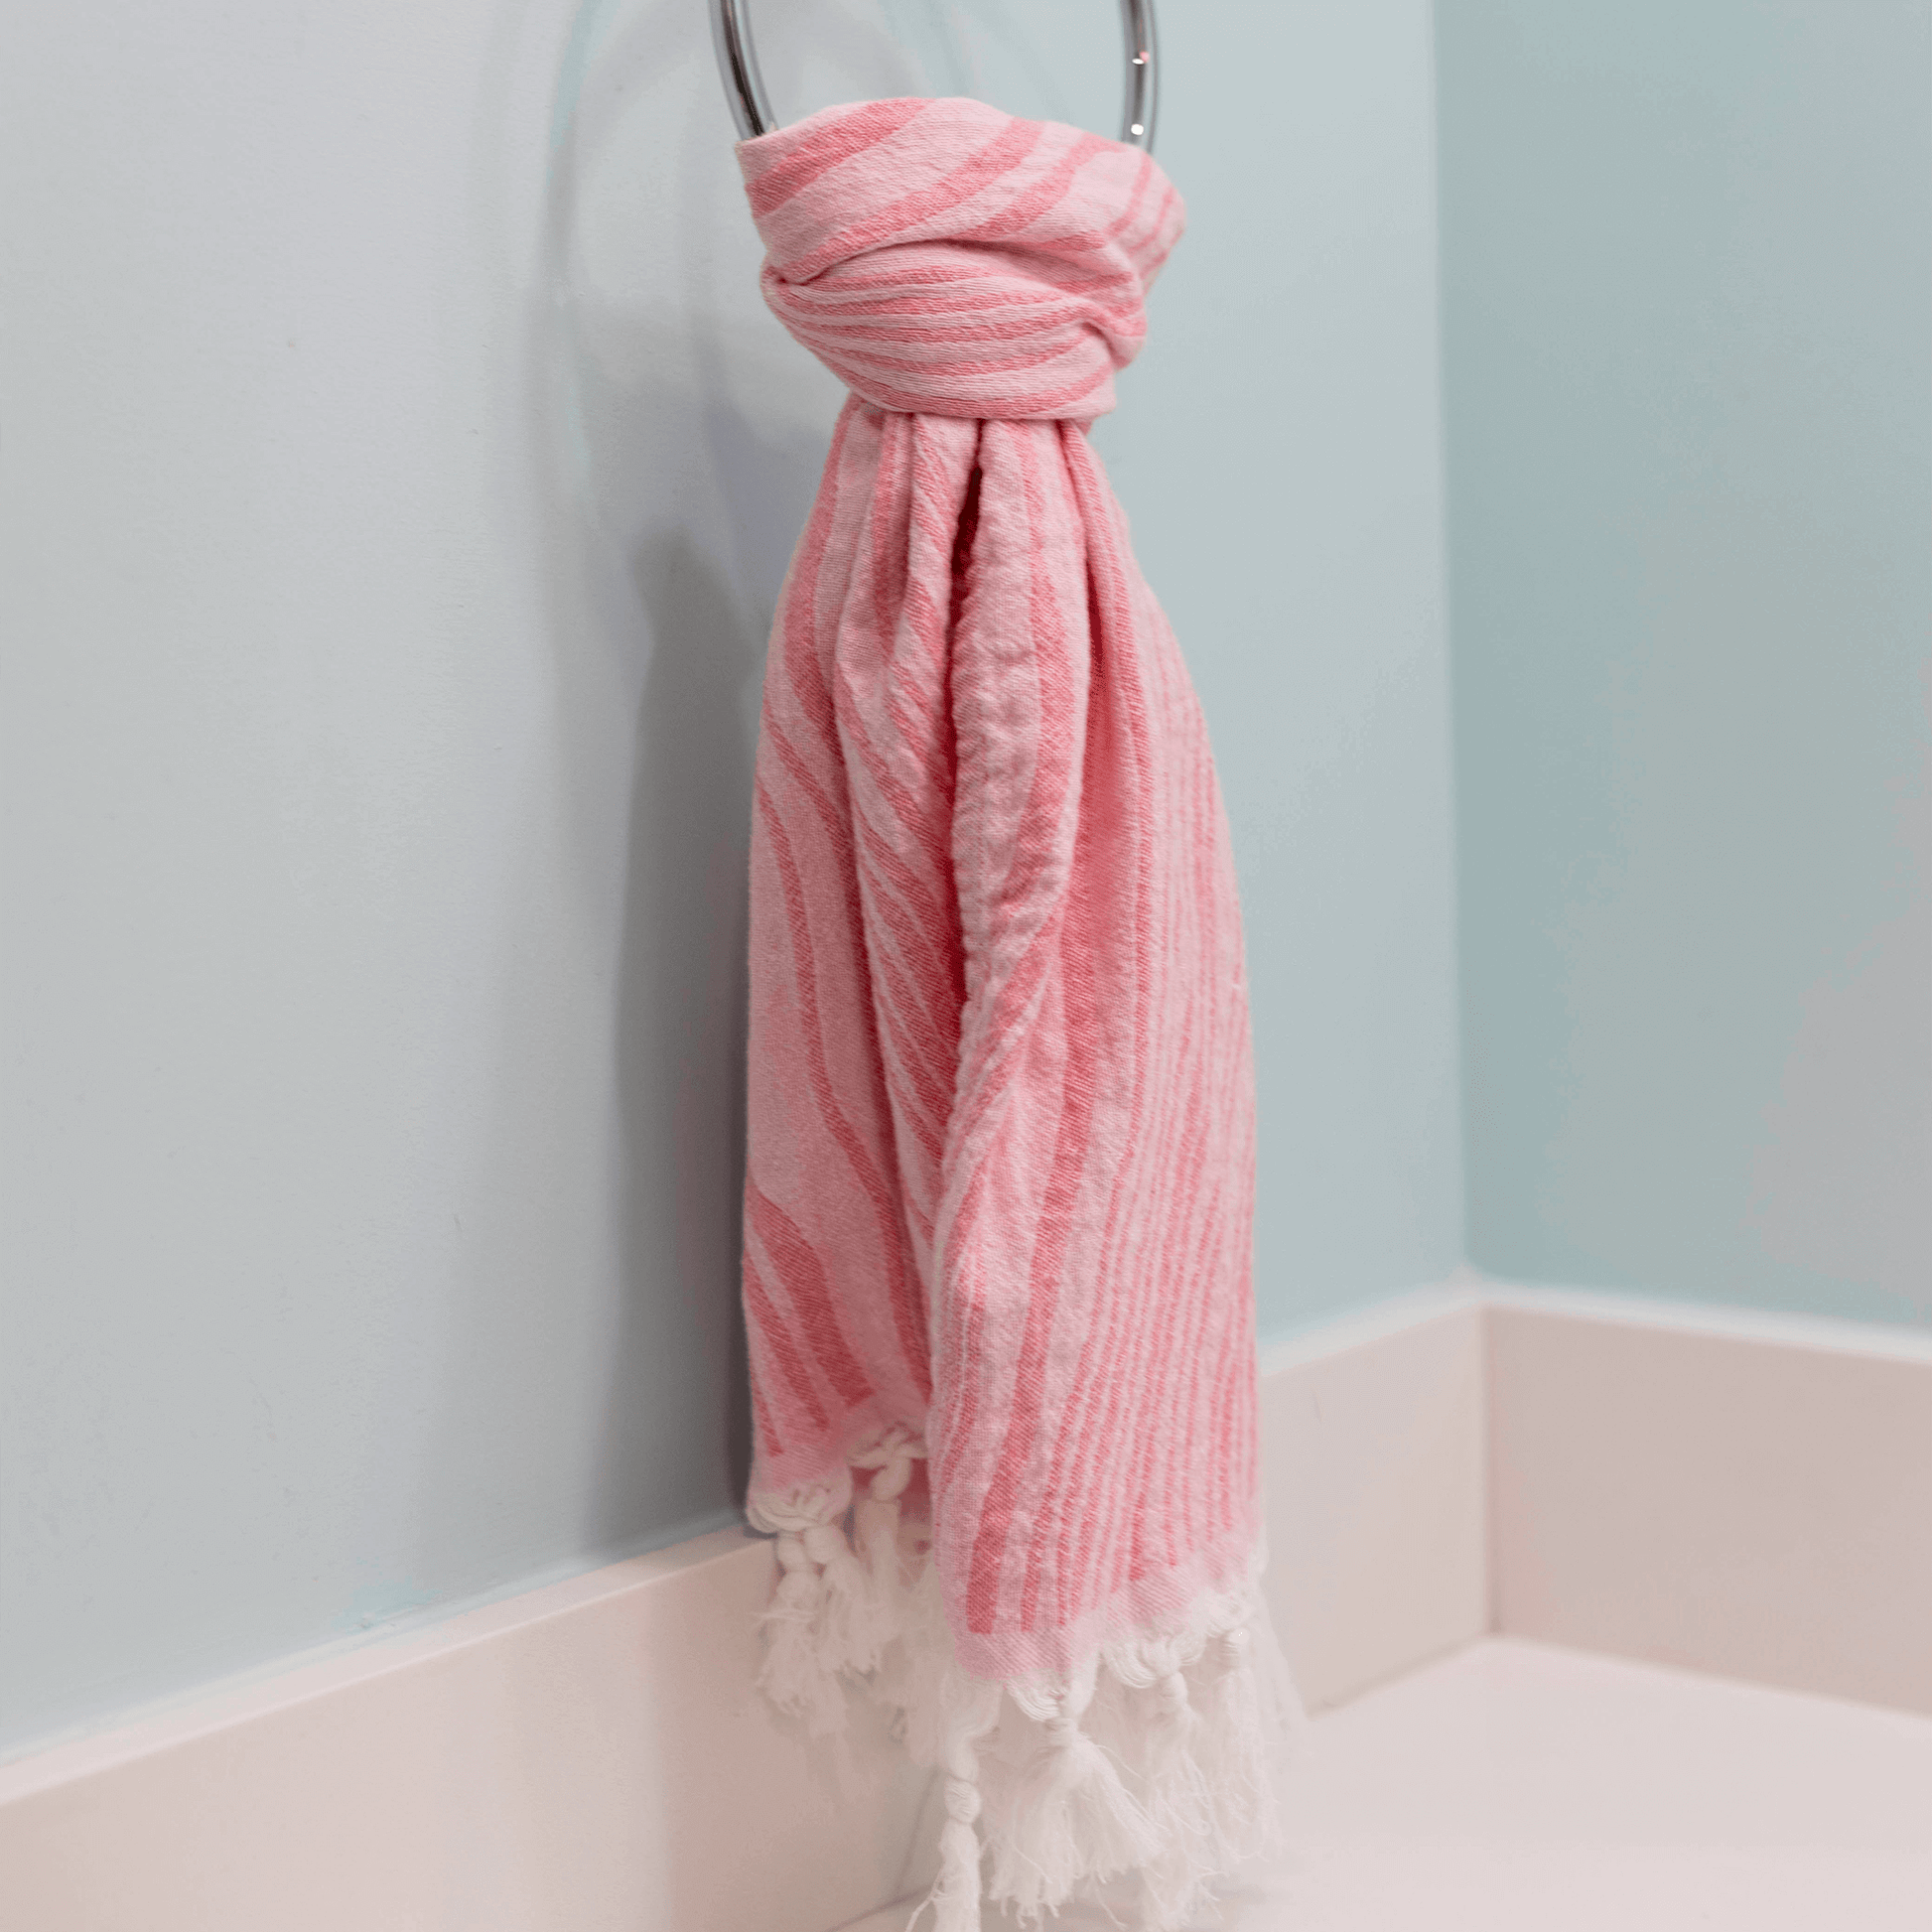 Pink Turkish towel as a hand towel